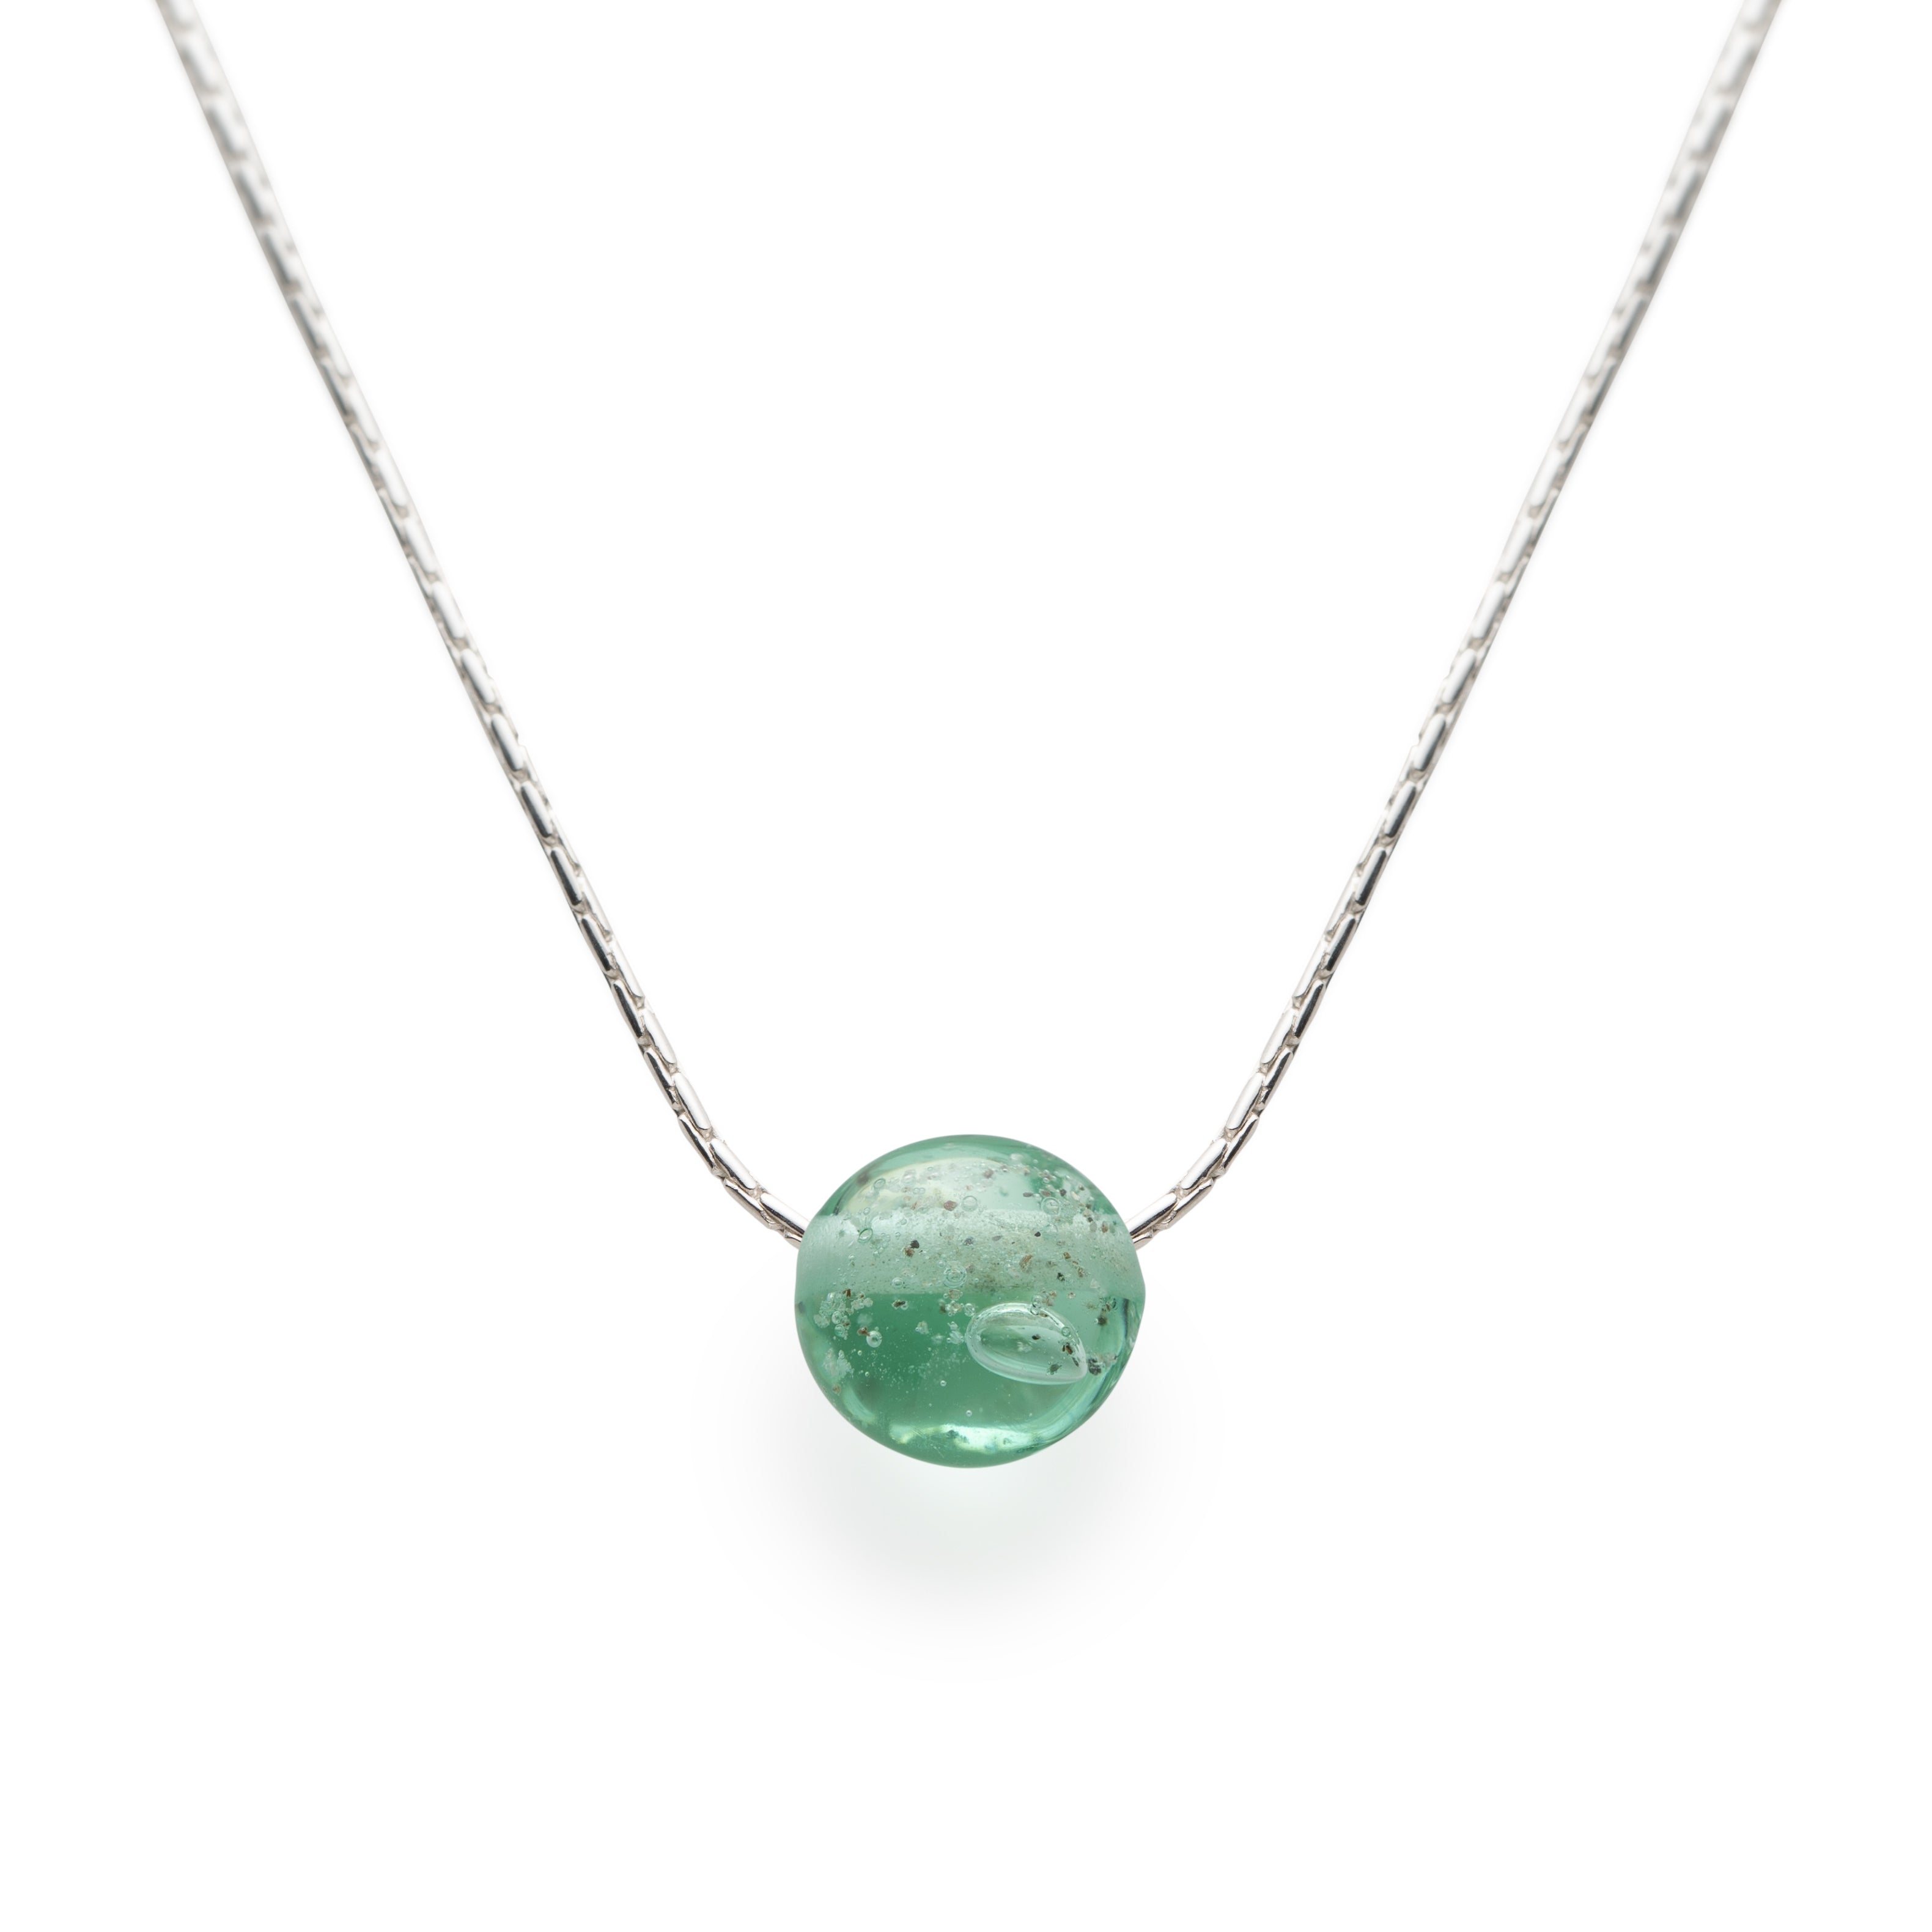 Silver Sand Pebble Necklace - Sea Glass Green